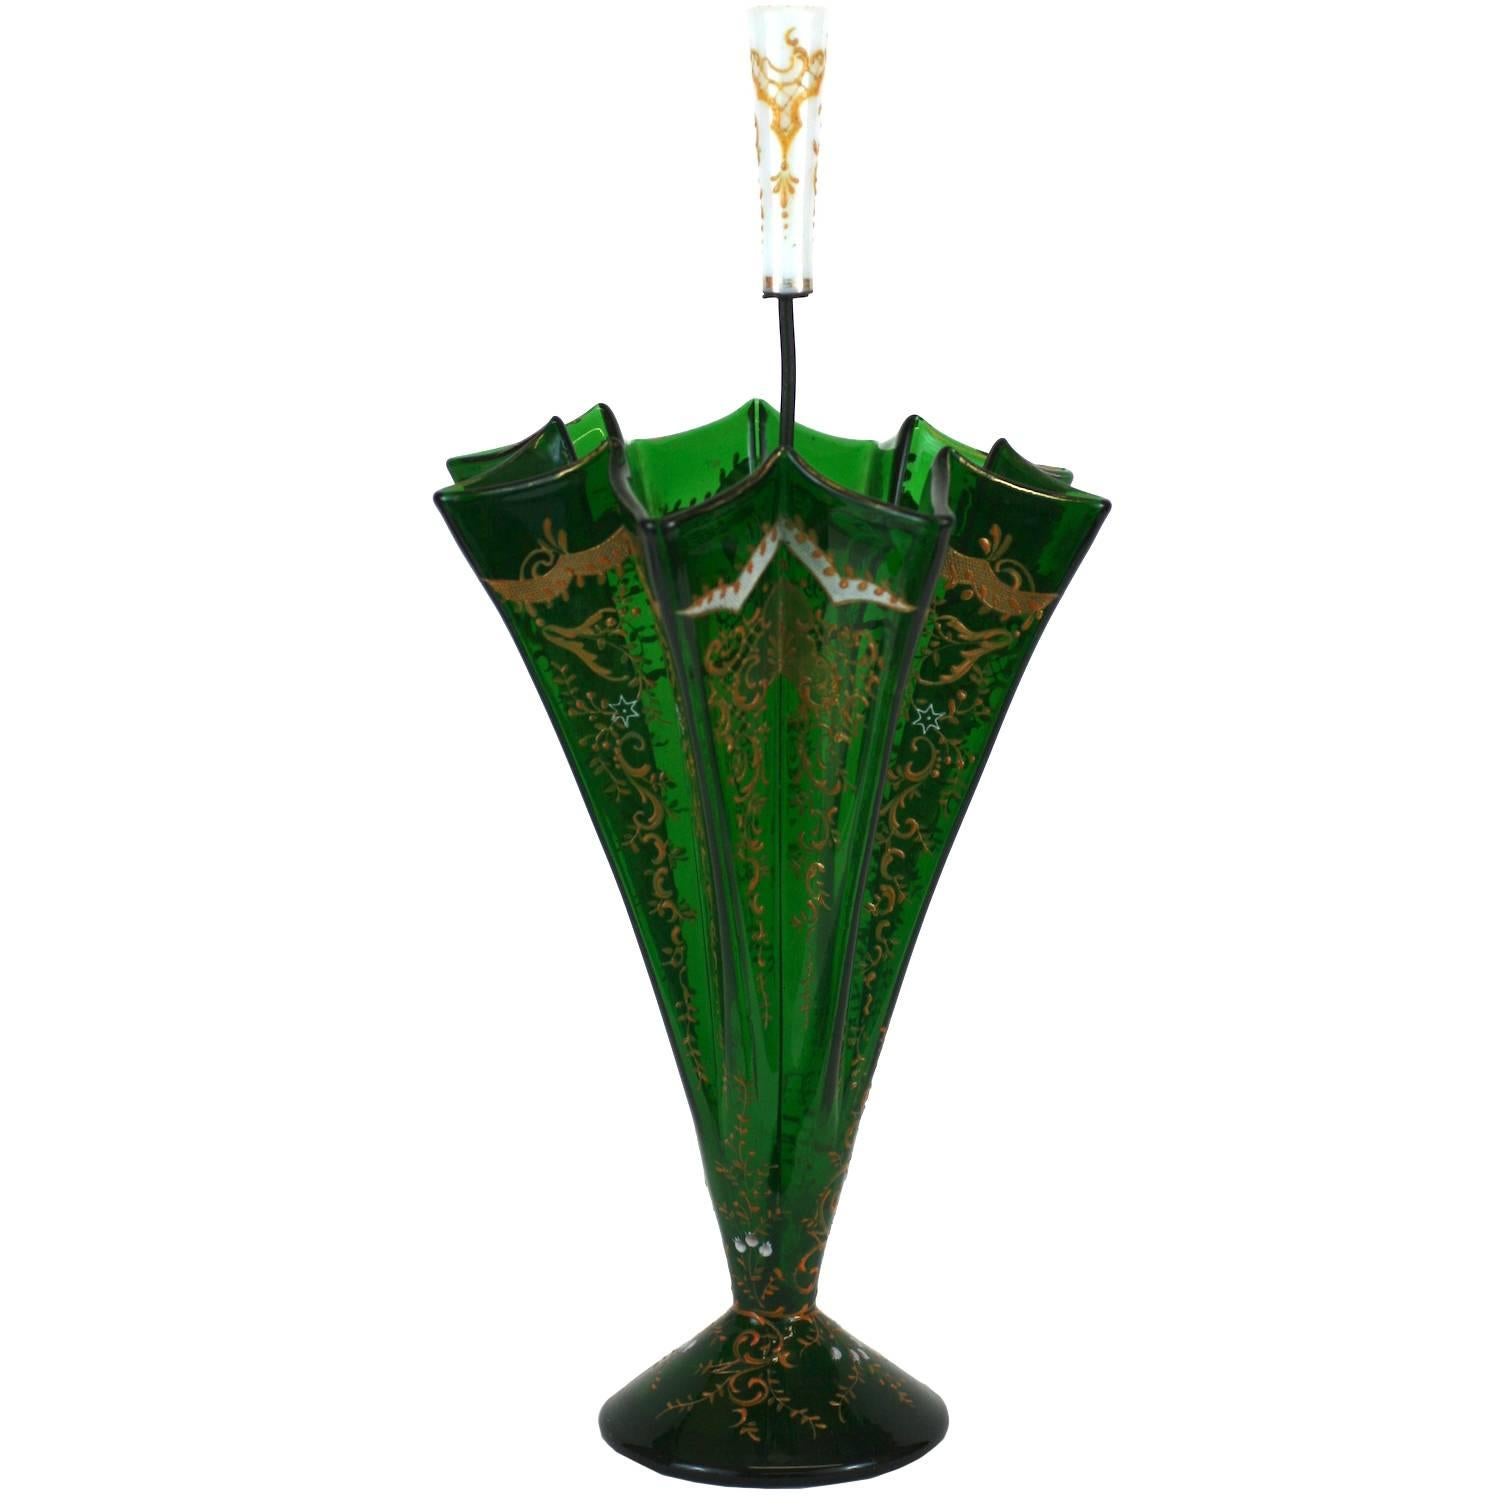 Charming Victorian Figural Umbrella Vase For Sale